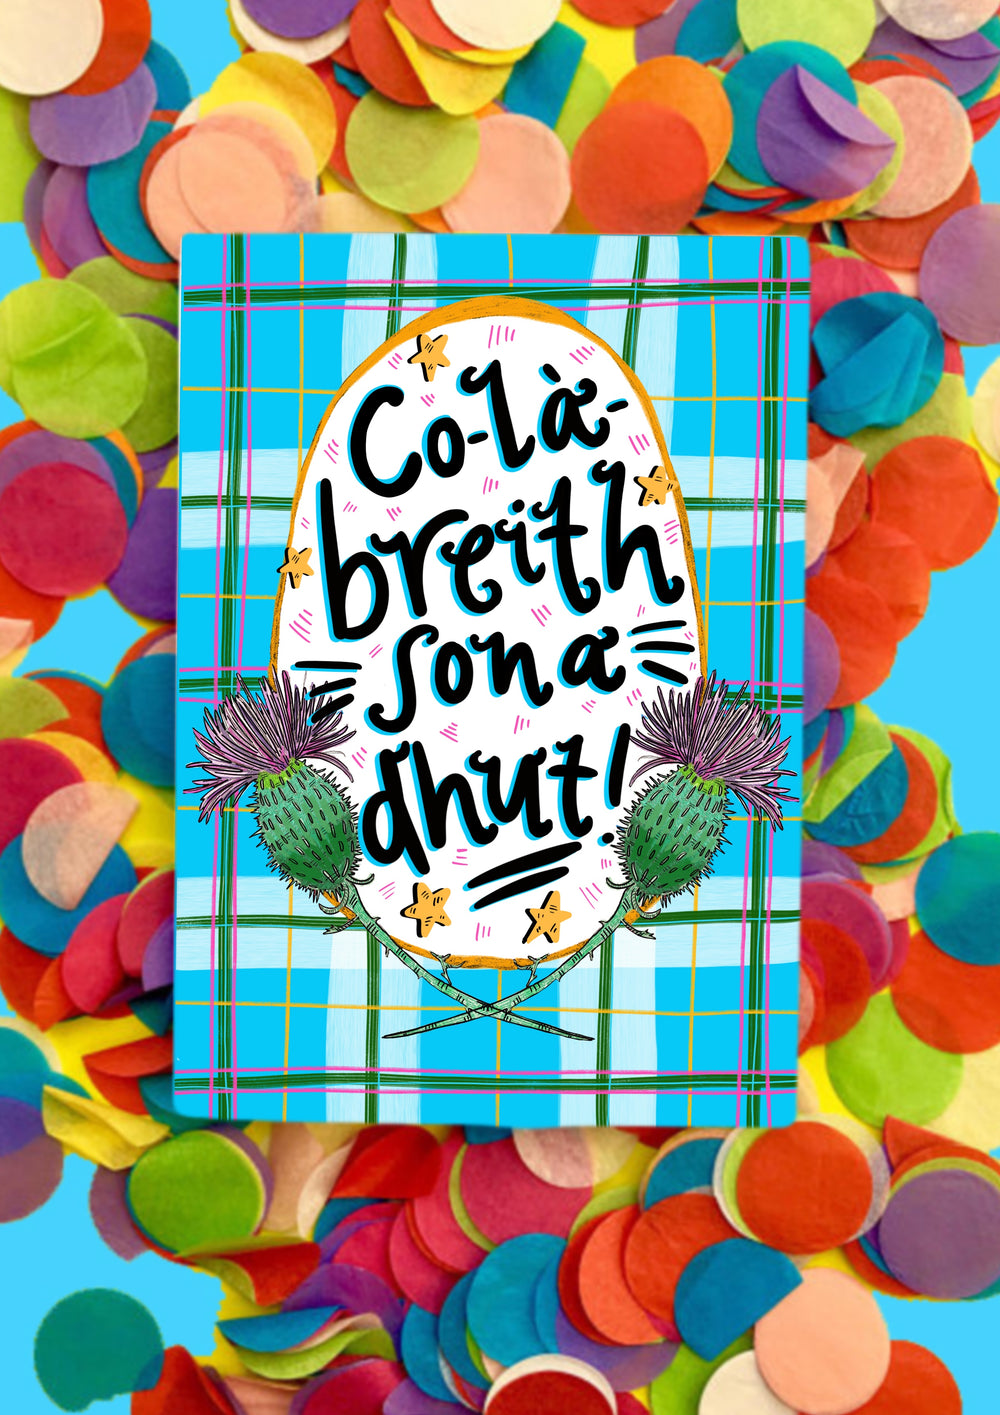 Co-la-breith sona dhut! (Happy Birthday in Gaelic) Greetings Card